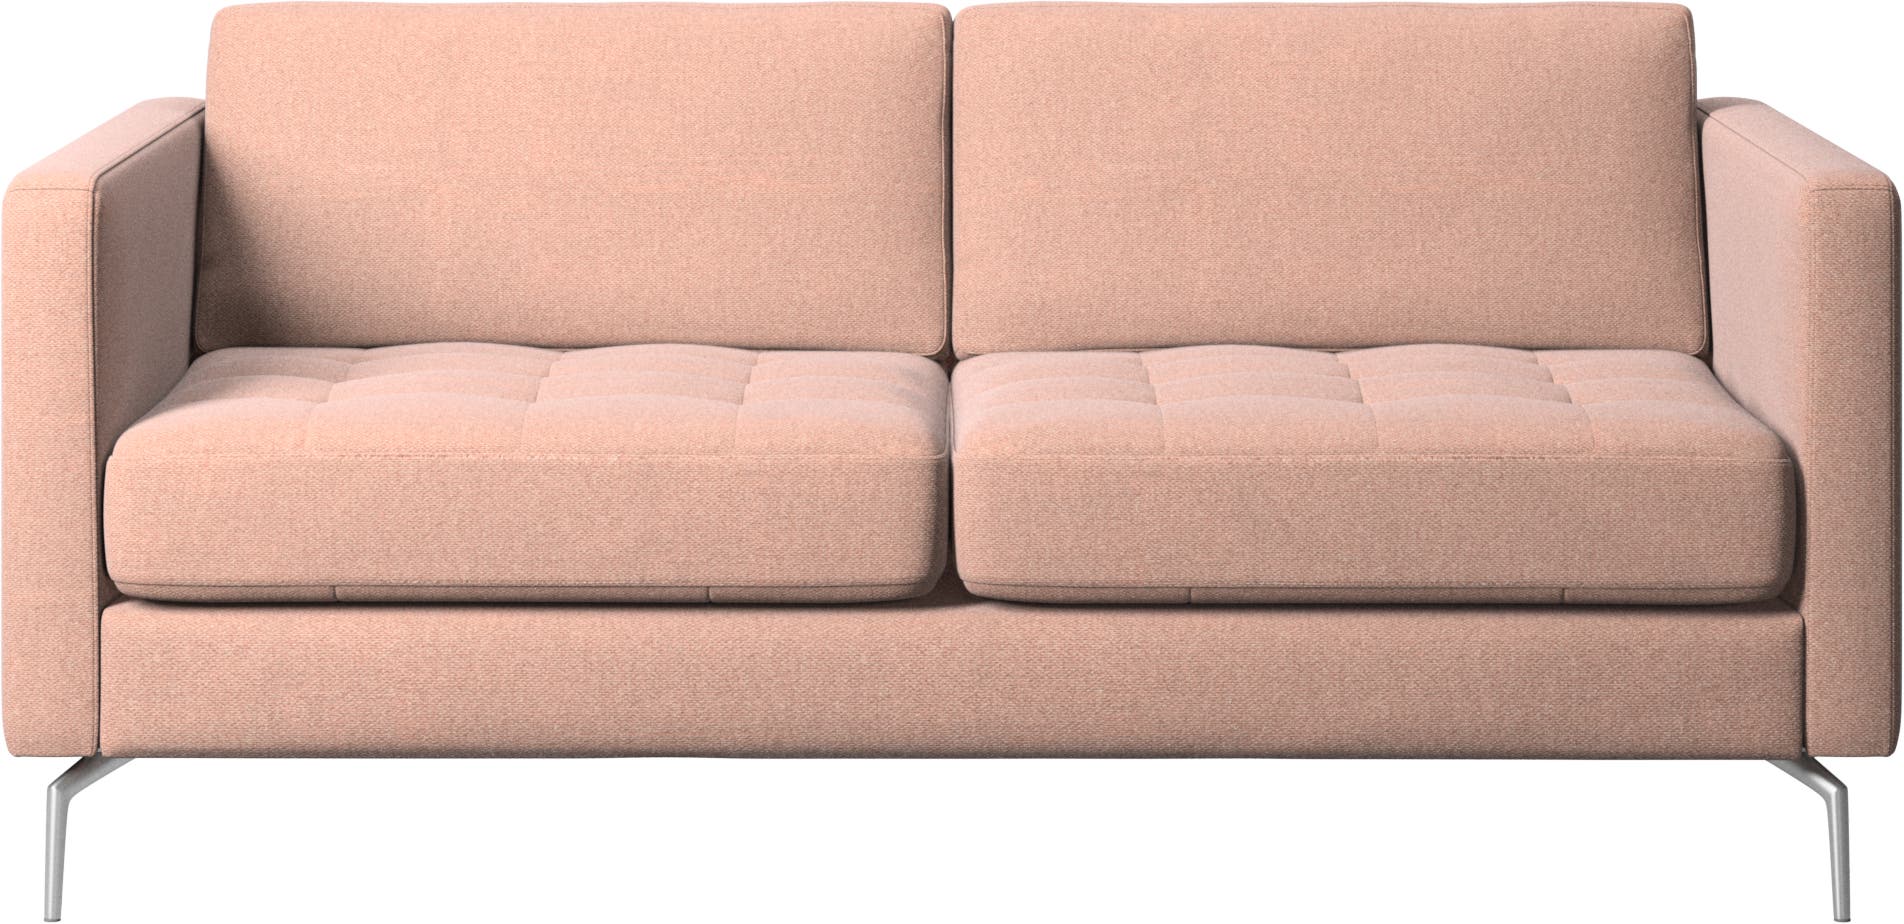 Sofa Osaka, pikowane siedzisko